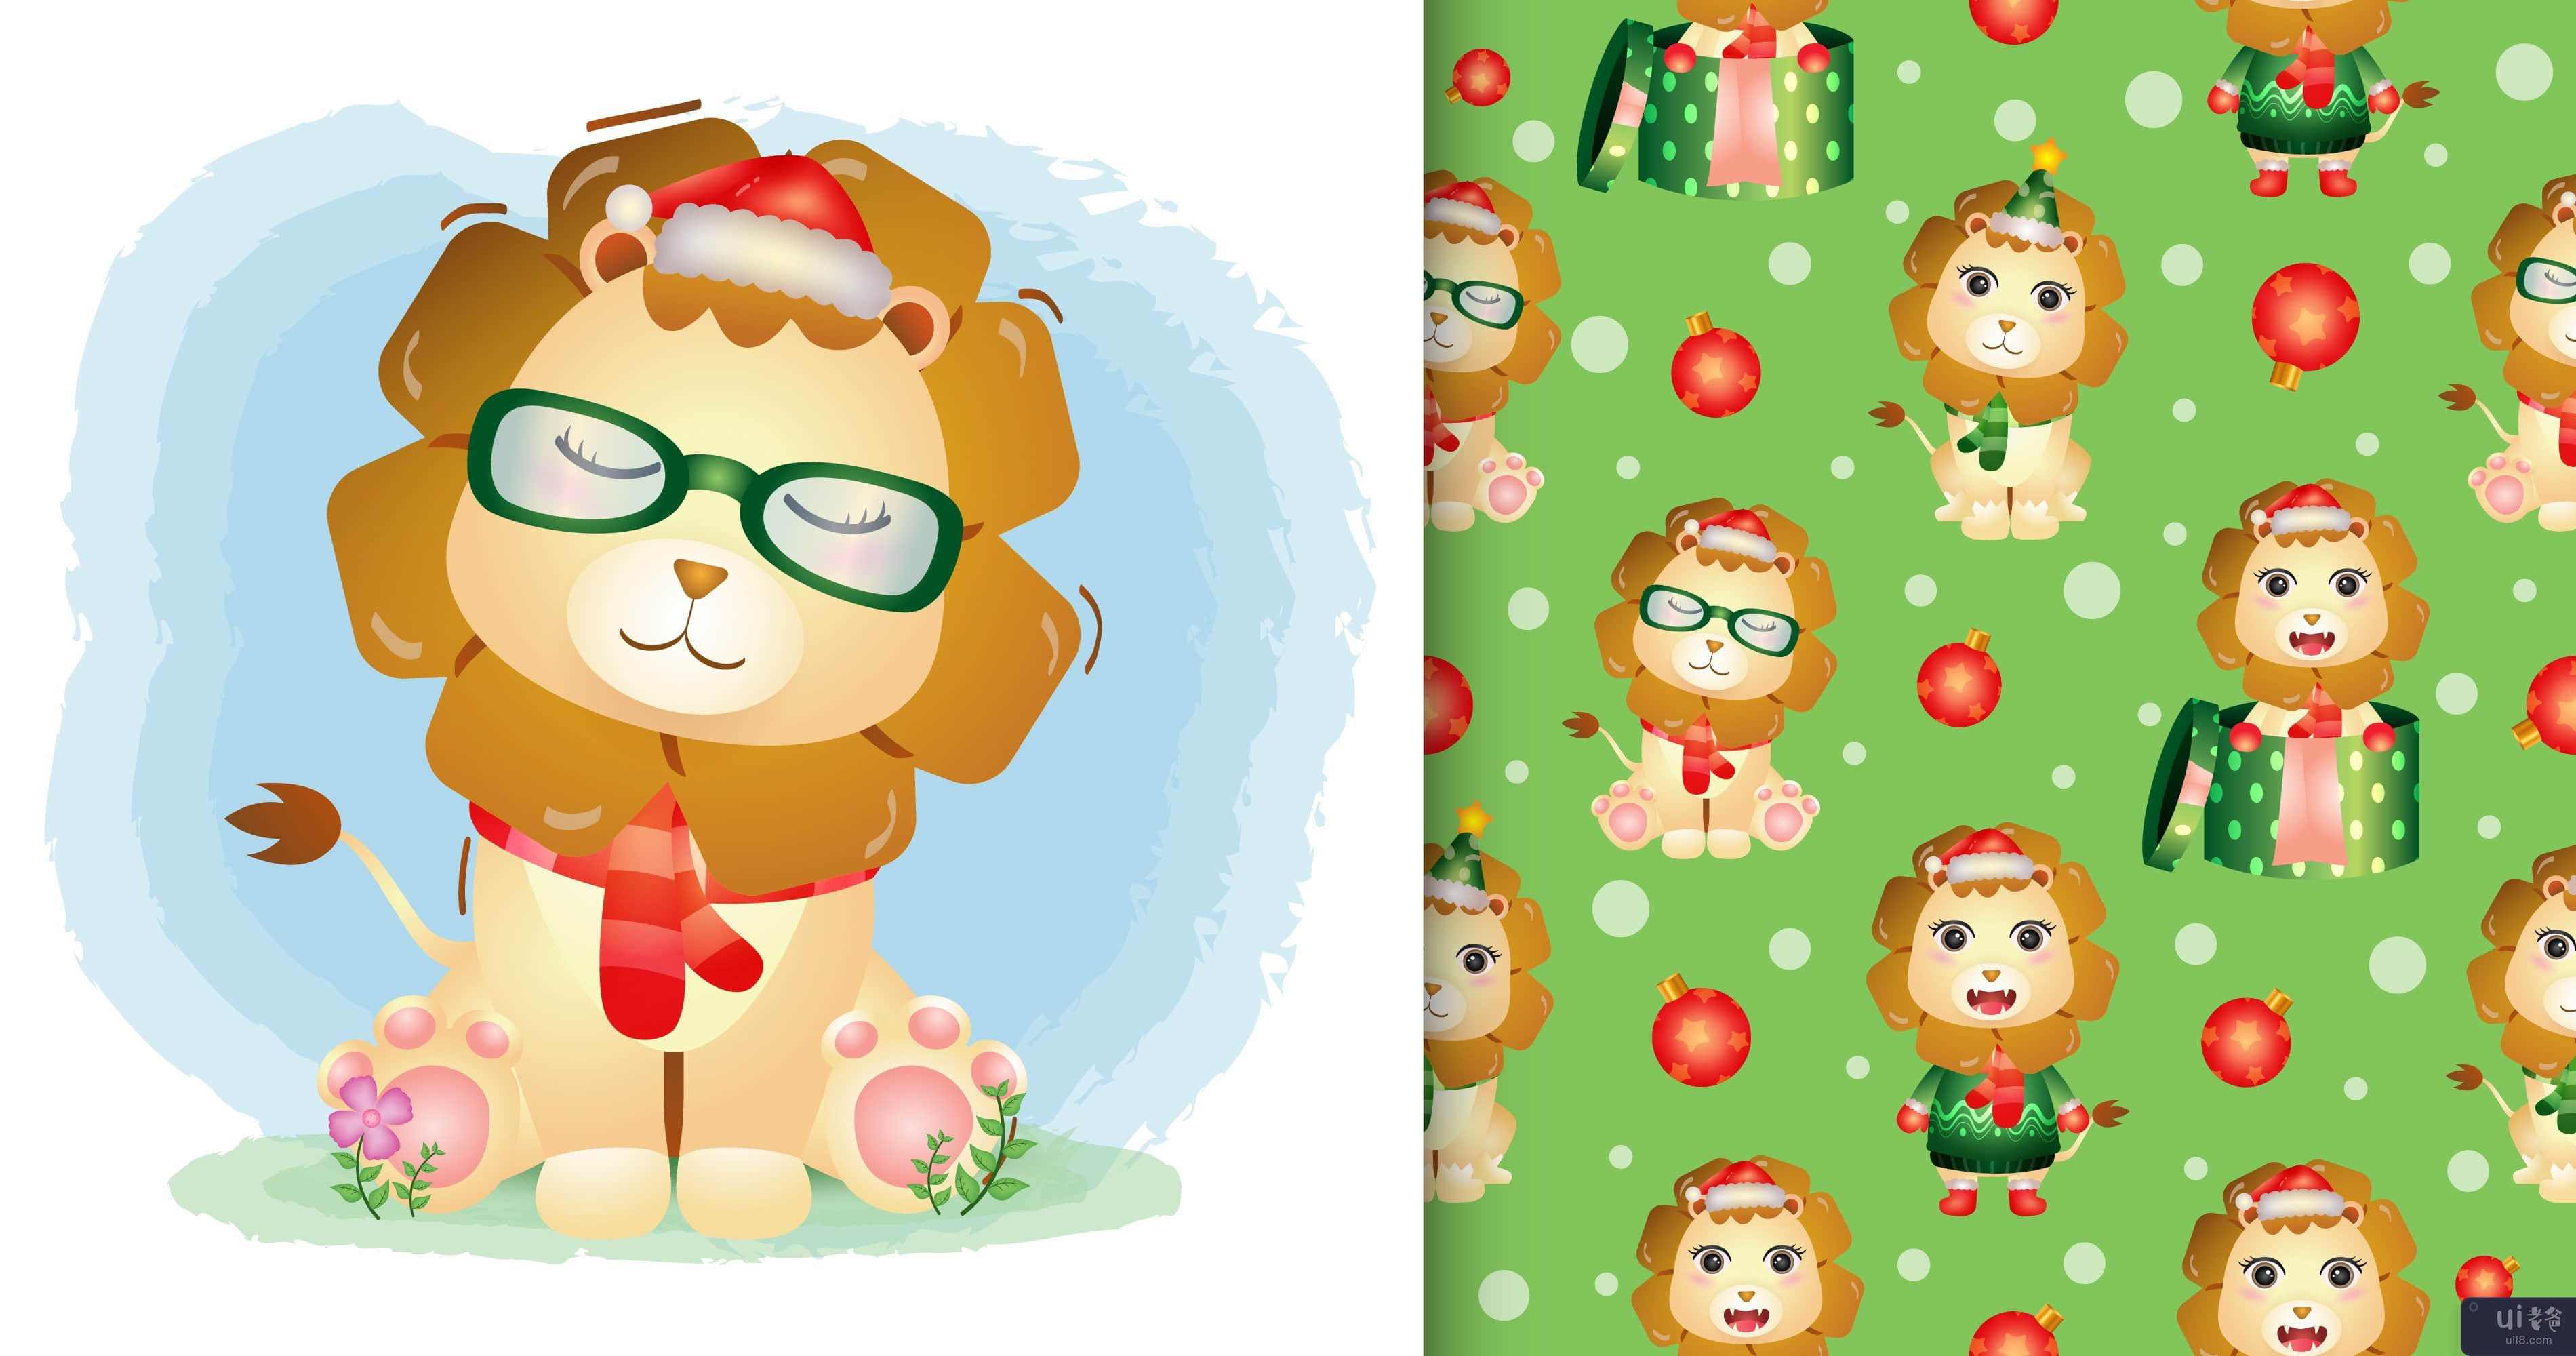 可爱的狮子圣诞人物无缝图案和插图设计(a cute lion christmas characters seamless pattern and illustration designs)插图2